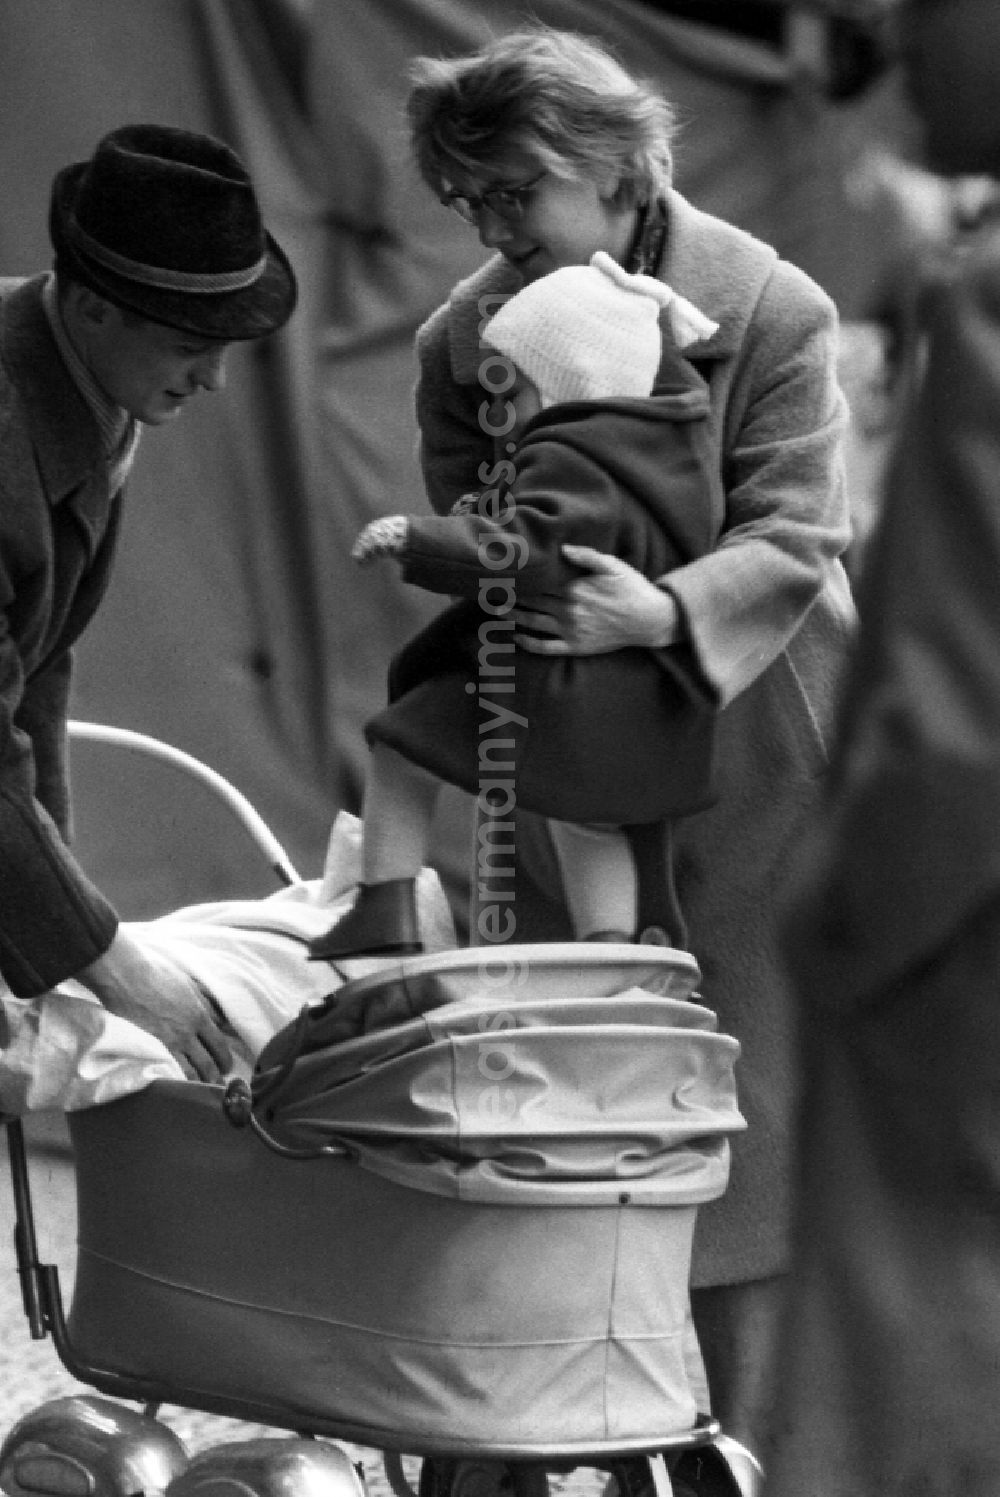 Berlin: Mother puts her daughter in the stroller in East Berlin in the territory of the former GDR, German Democratic Republic